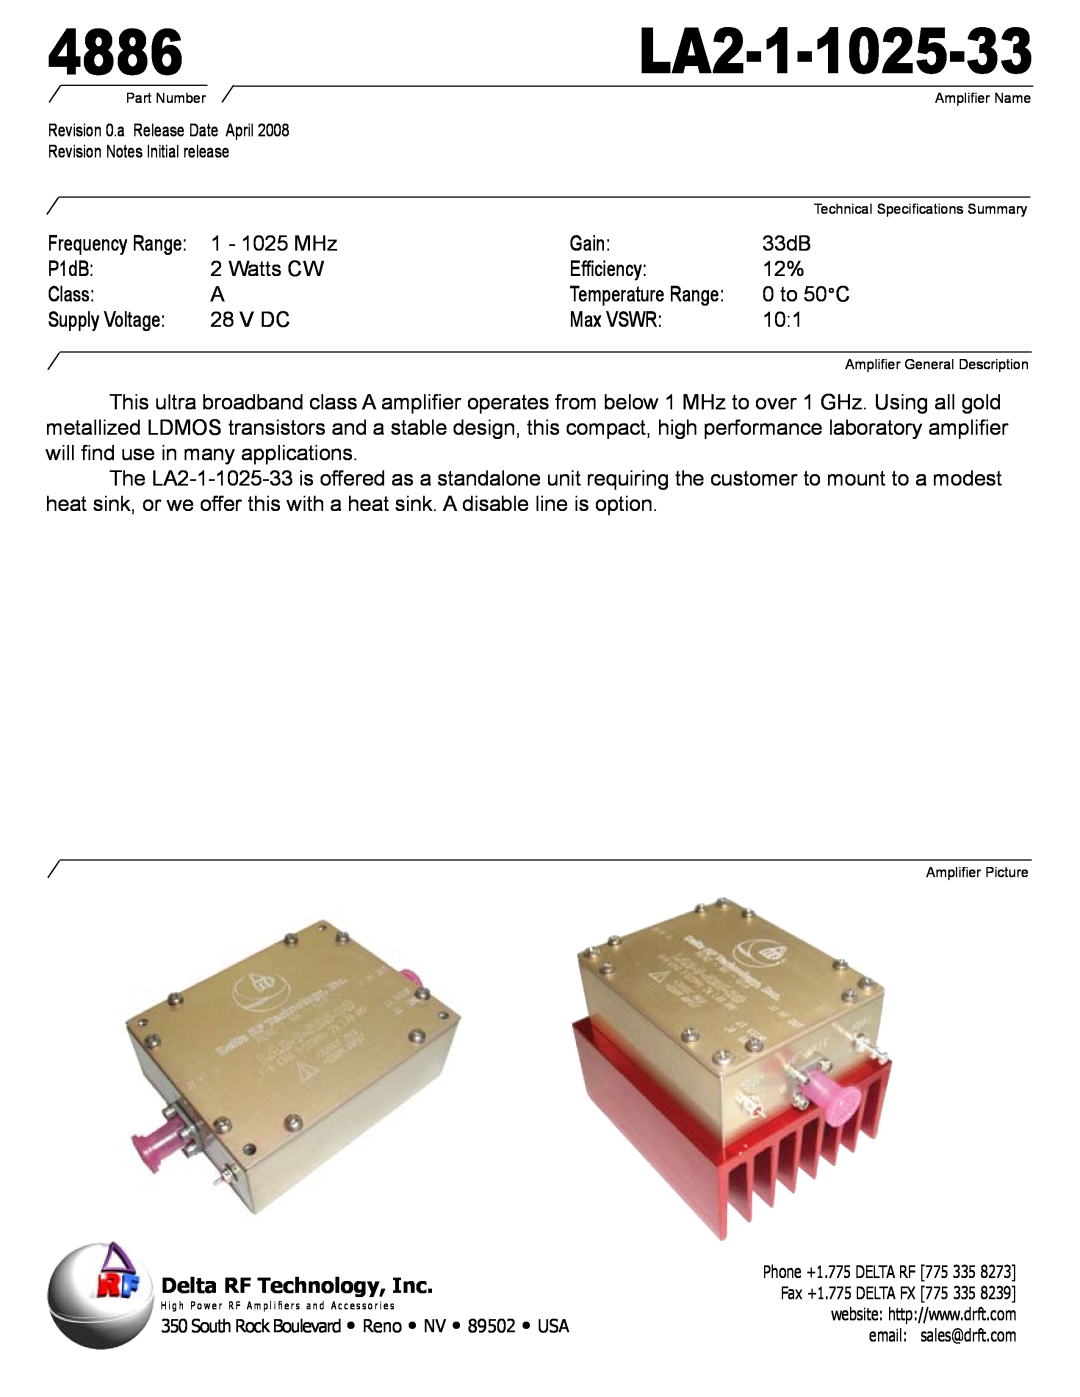 Delta Electronics manual 4886LA2-1-1025-33, Delta RF Technology, Inc 